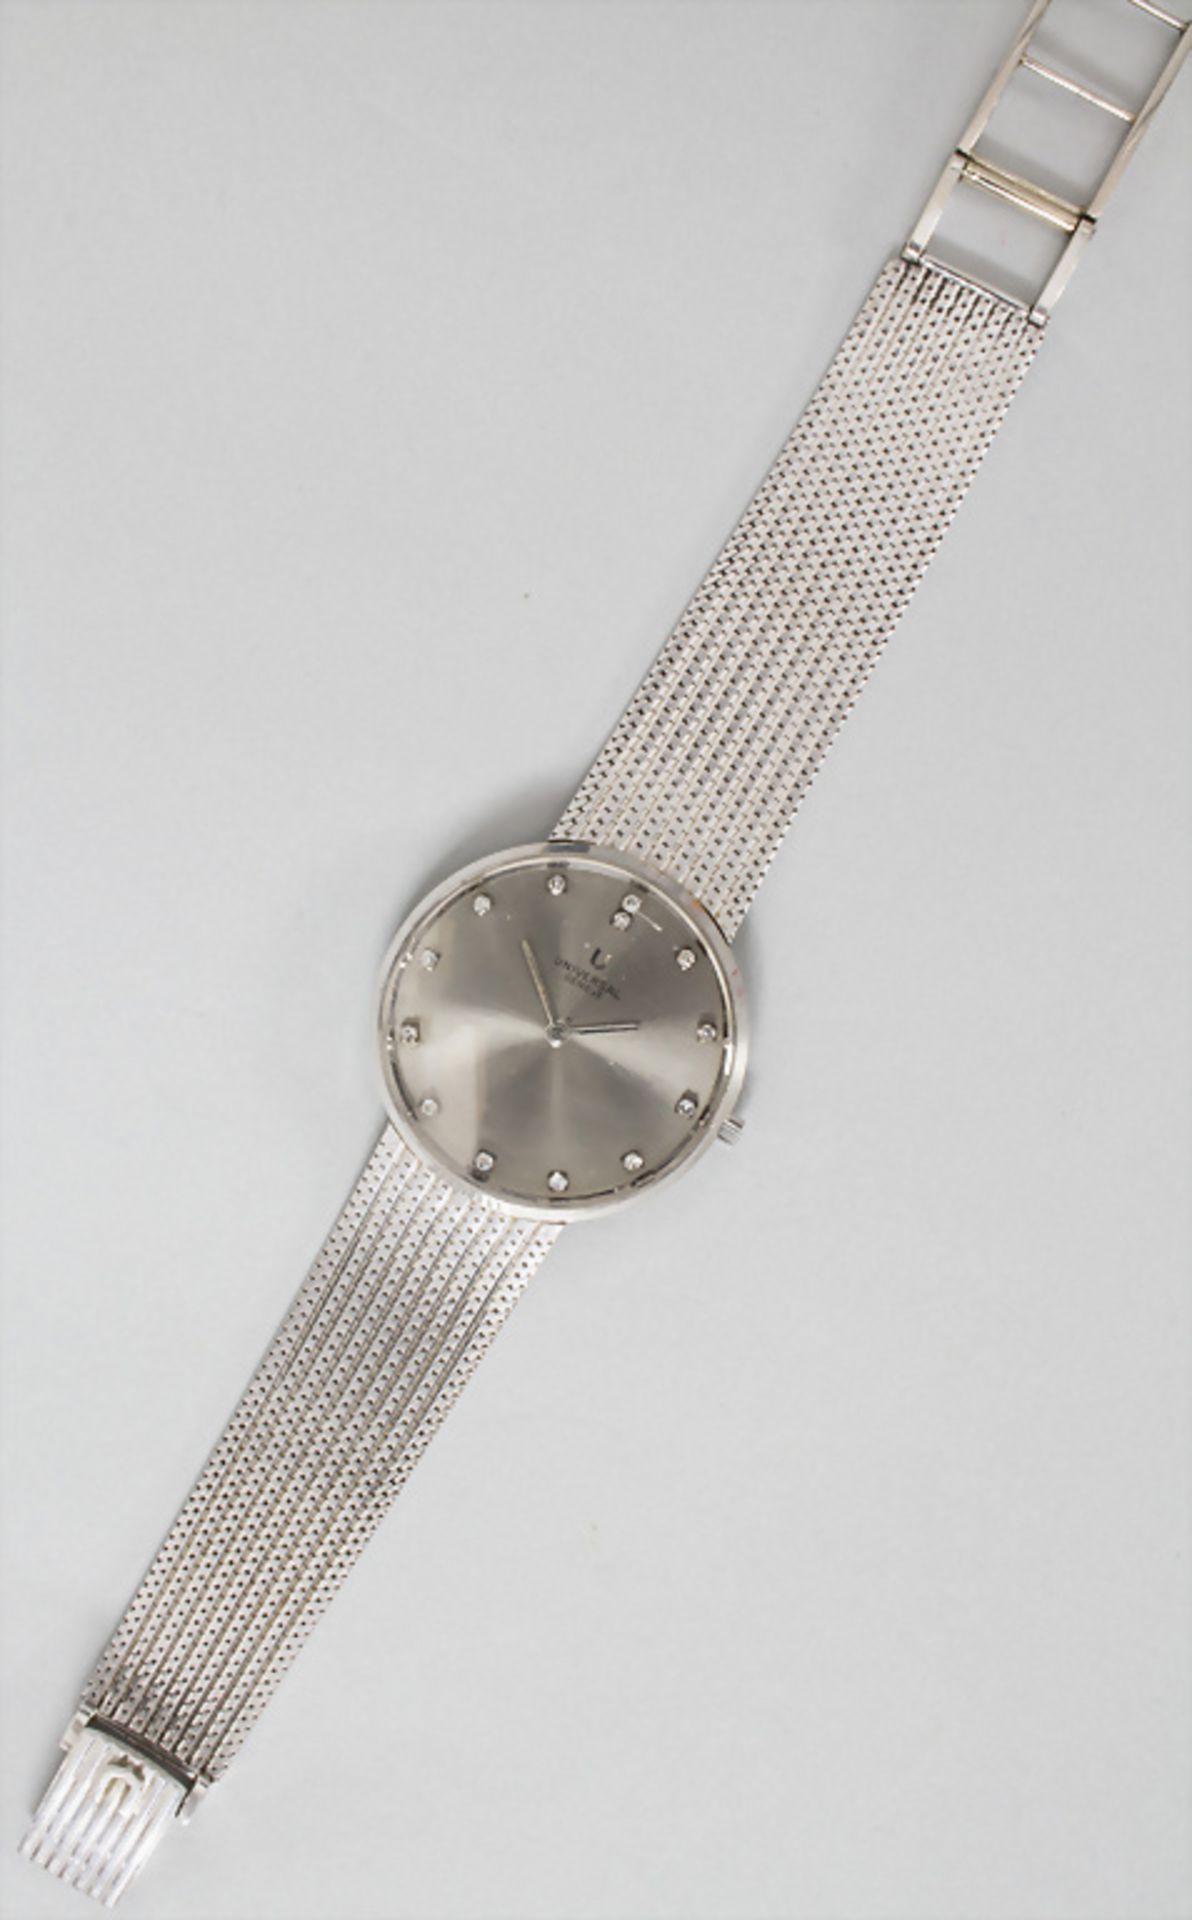 Herrenarmbanduhr / A men's wristwatch, Universal Géneve, Swiss, um 1970 - Image 3 of 4